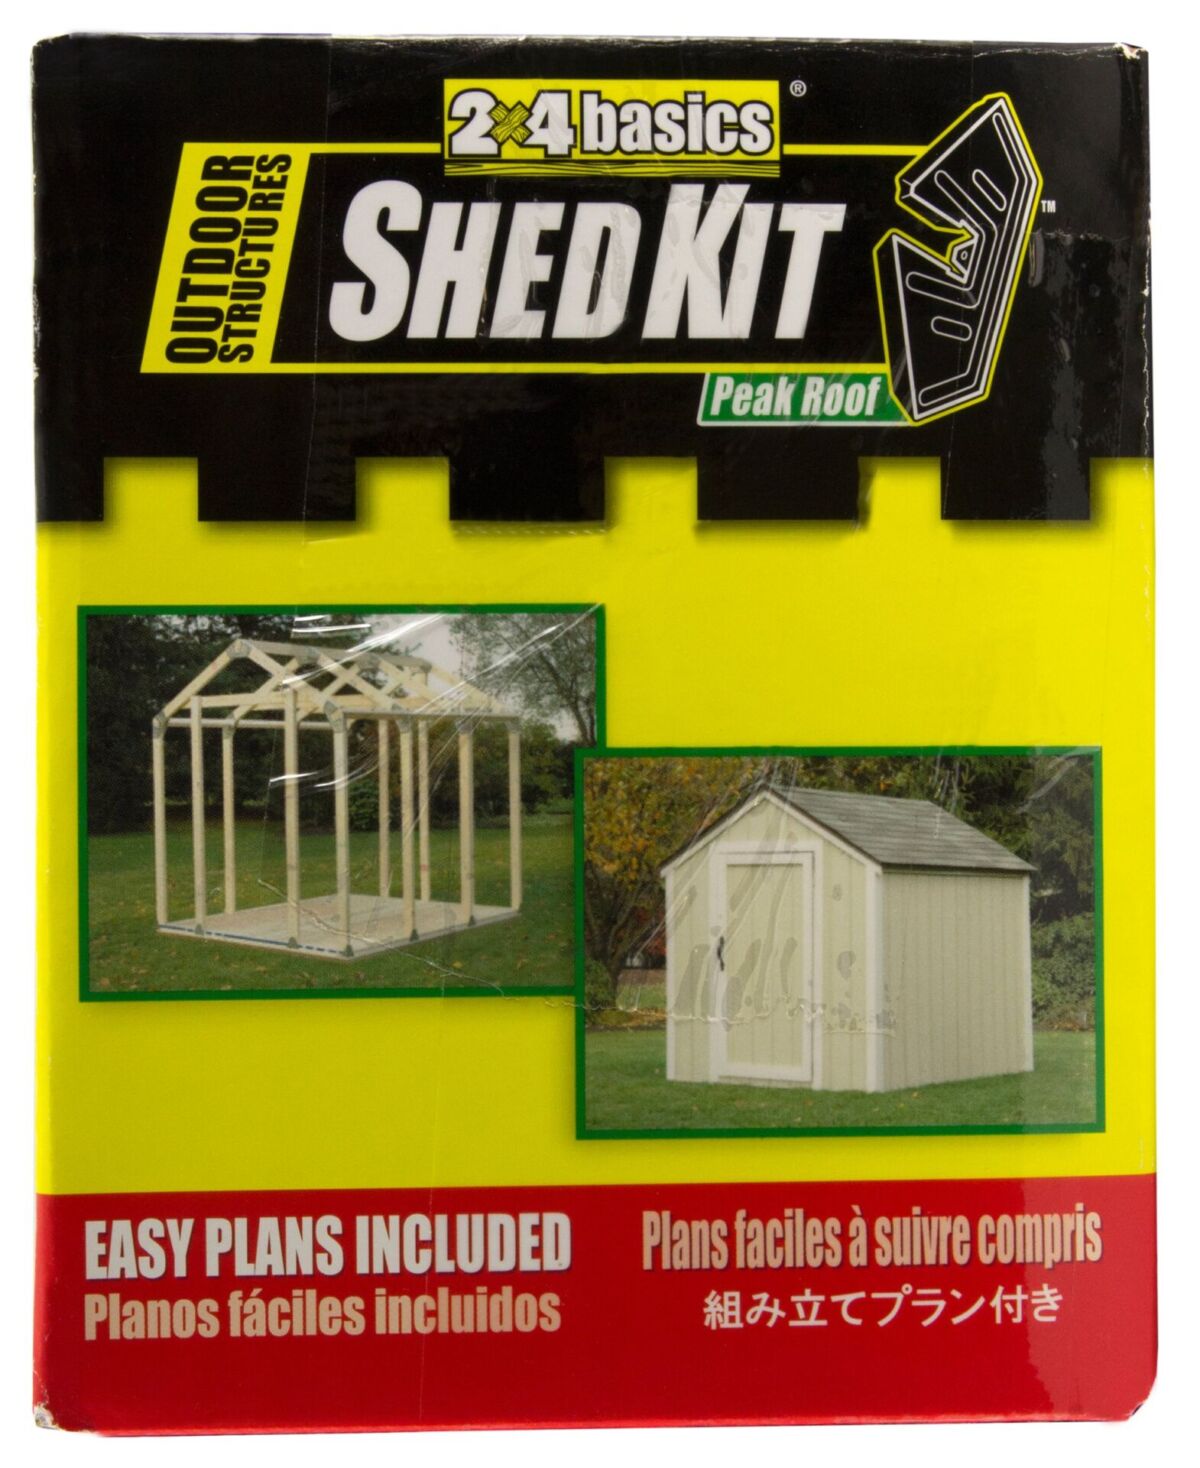 2x4basics 90192MI Custom Shed Kit with Peak Roof | The Storepaperoomates Retail Market - Fast Affordable Shopping